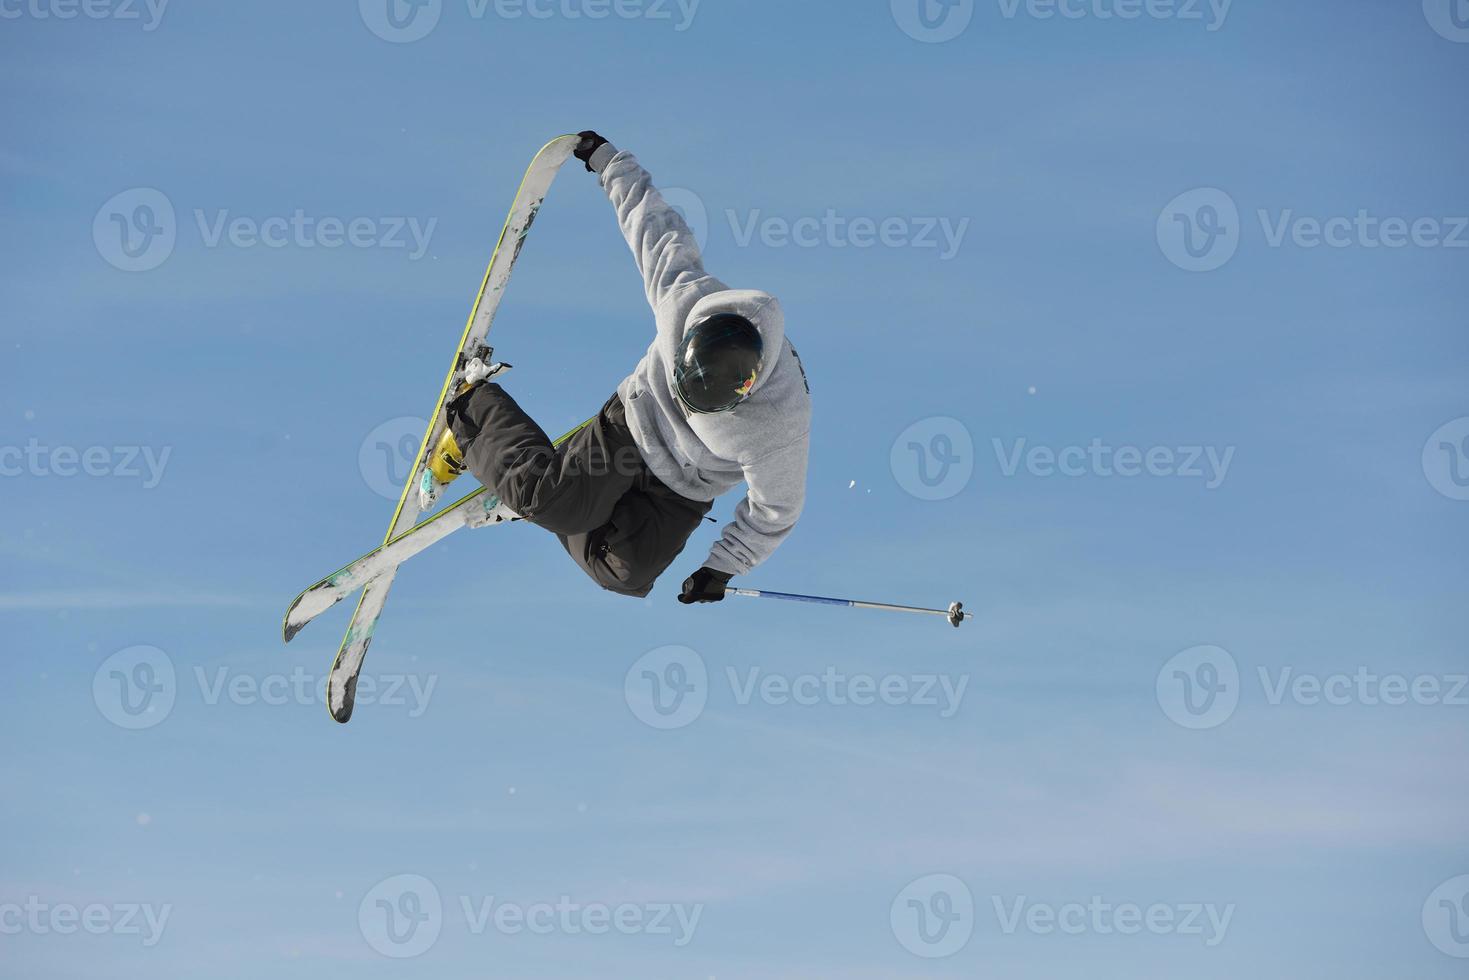 Ski jump view photo